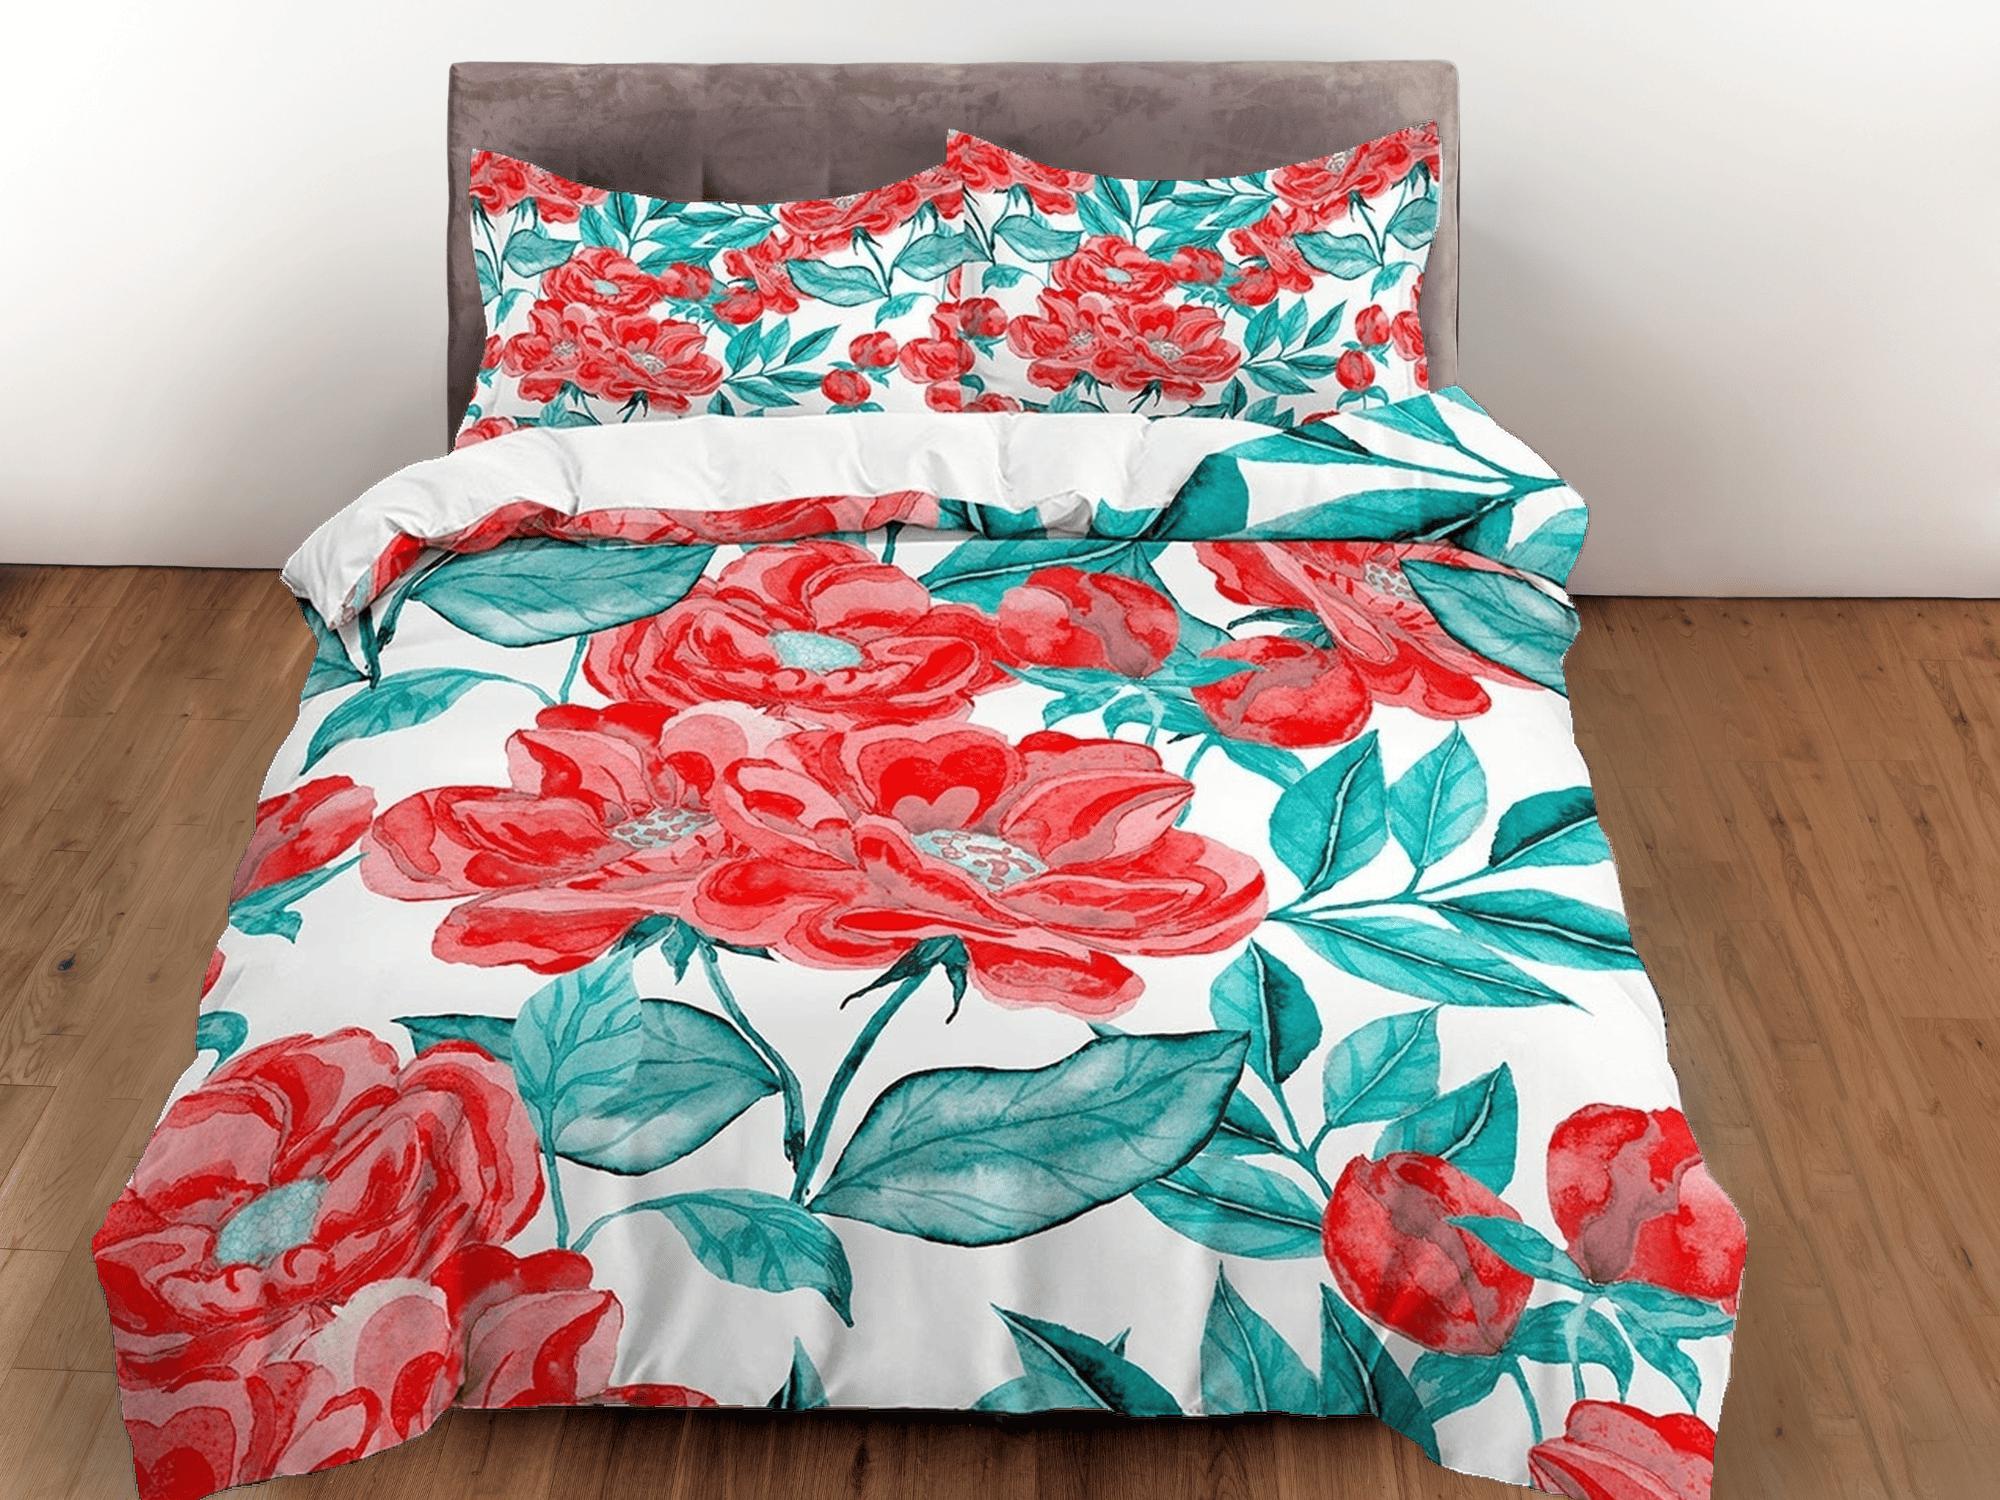 daintyduvet Red green biophilic bedding, floral printed duvet cover queen, king, boho duvet, designer bedding, aesthetic bedding, maximalist decor